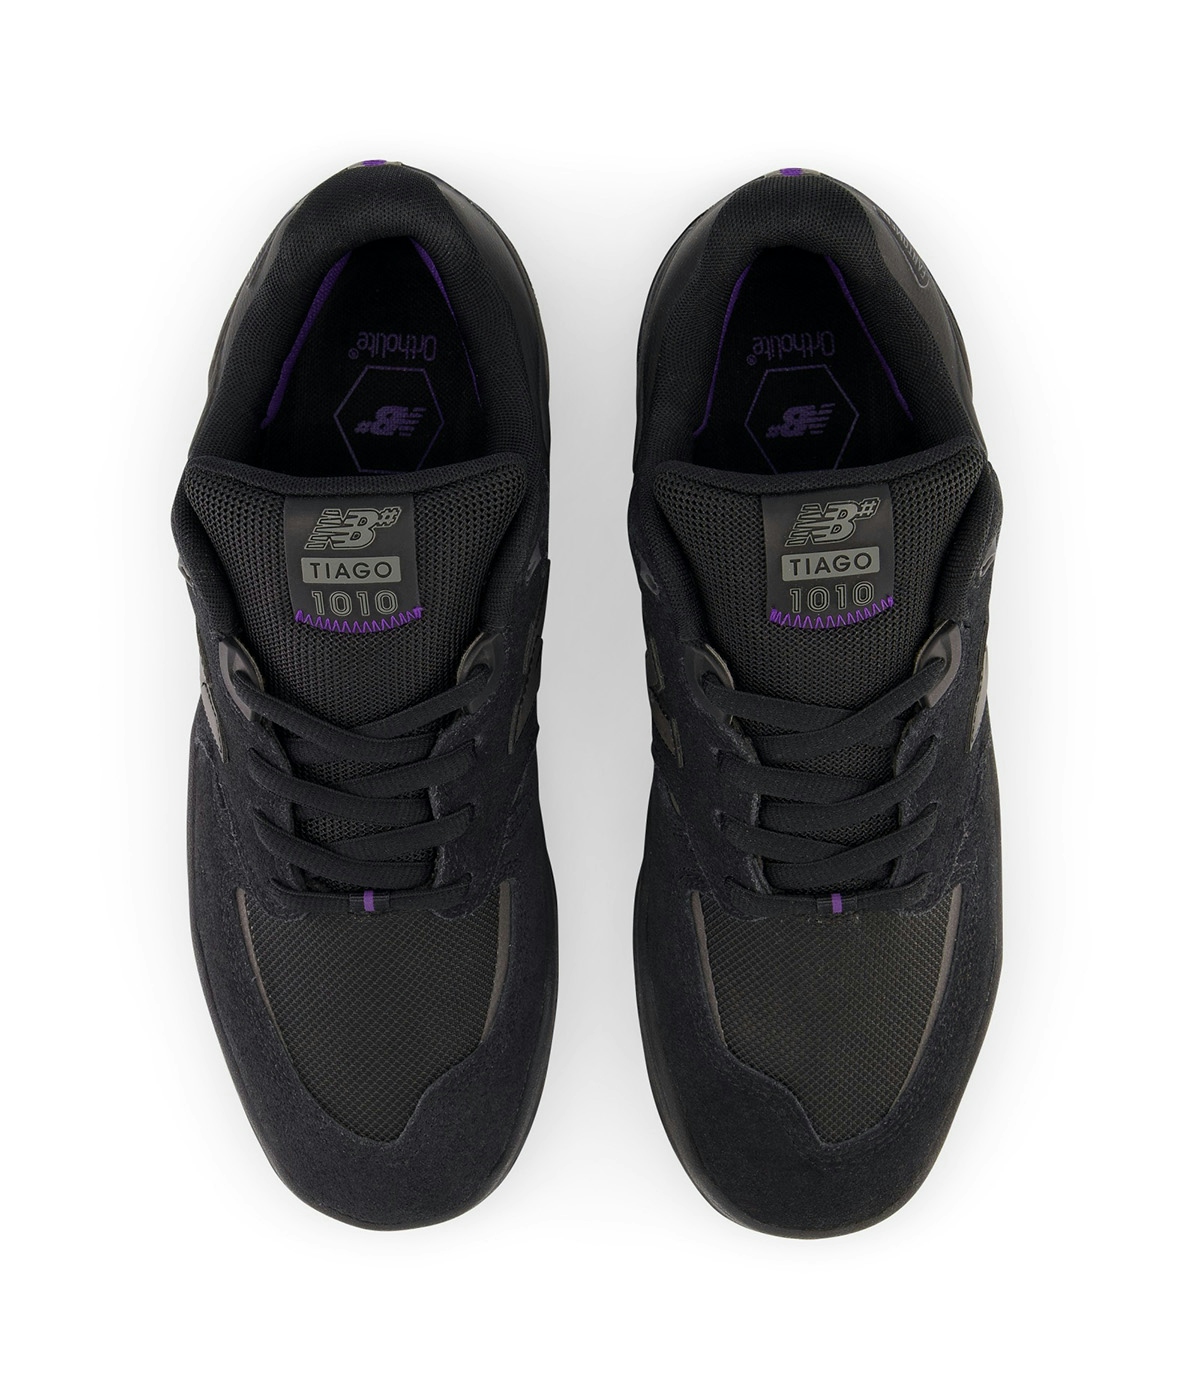 New Balance Numeric Tiago Lemos 1010 Shoes Black 3